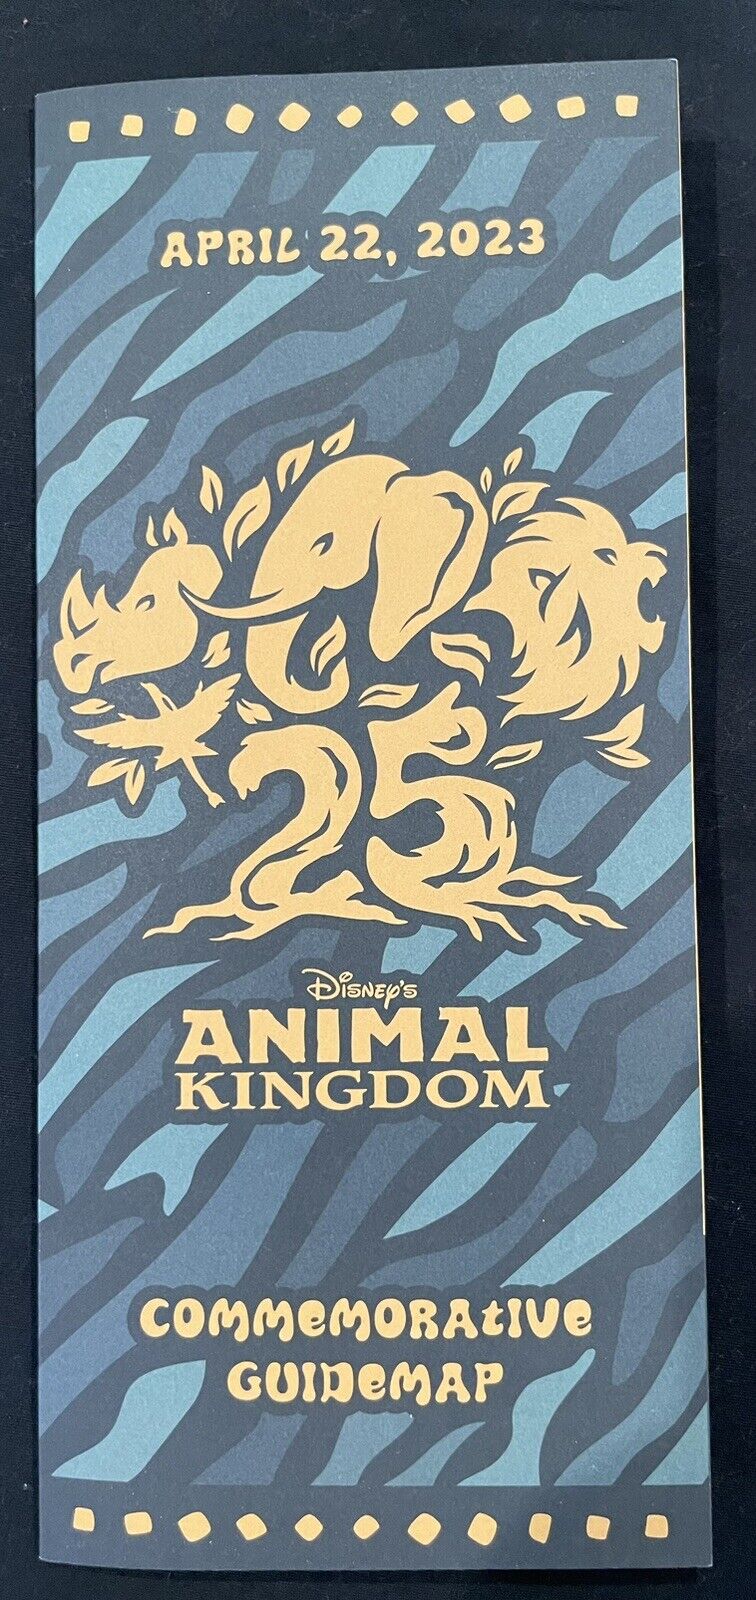 Disney’s Animal Kingdom 25th Anniversary Dated Commemorative Guide Map 4/22/23